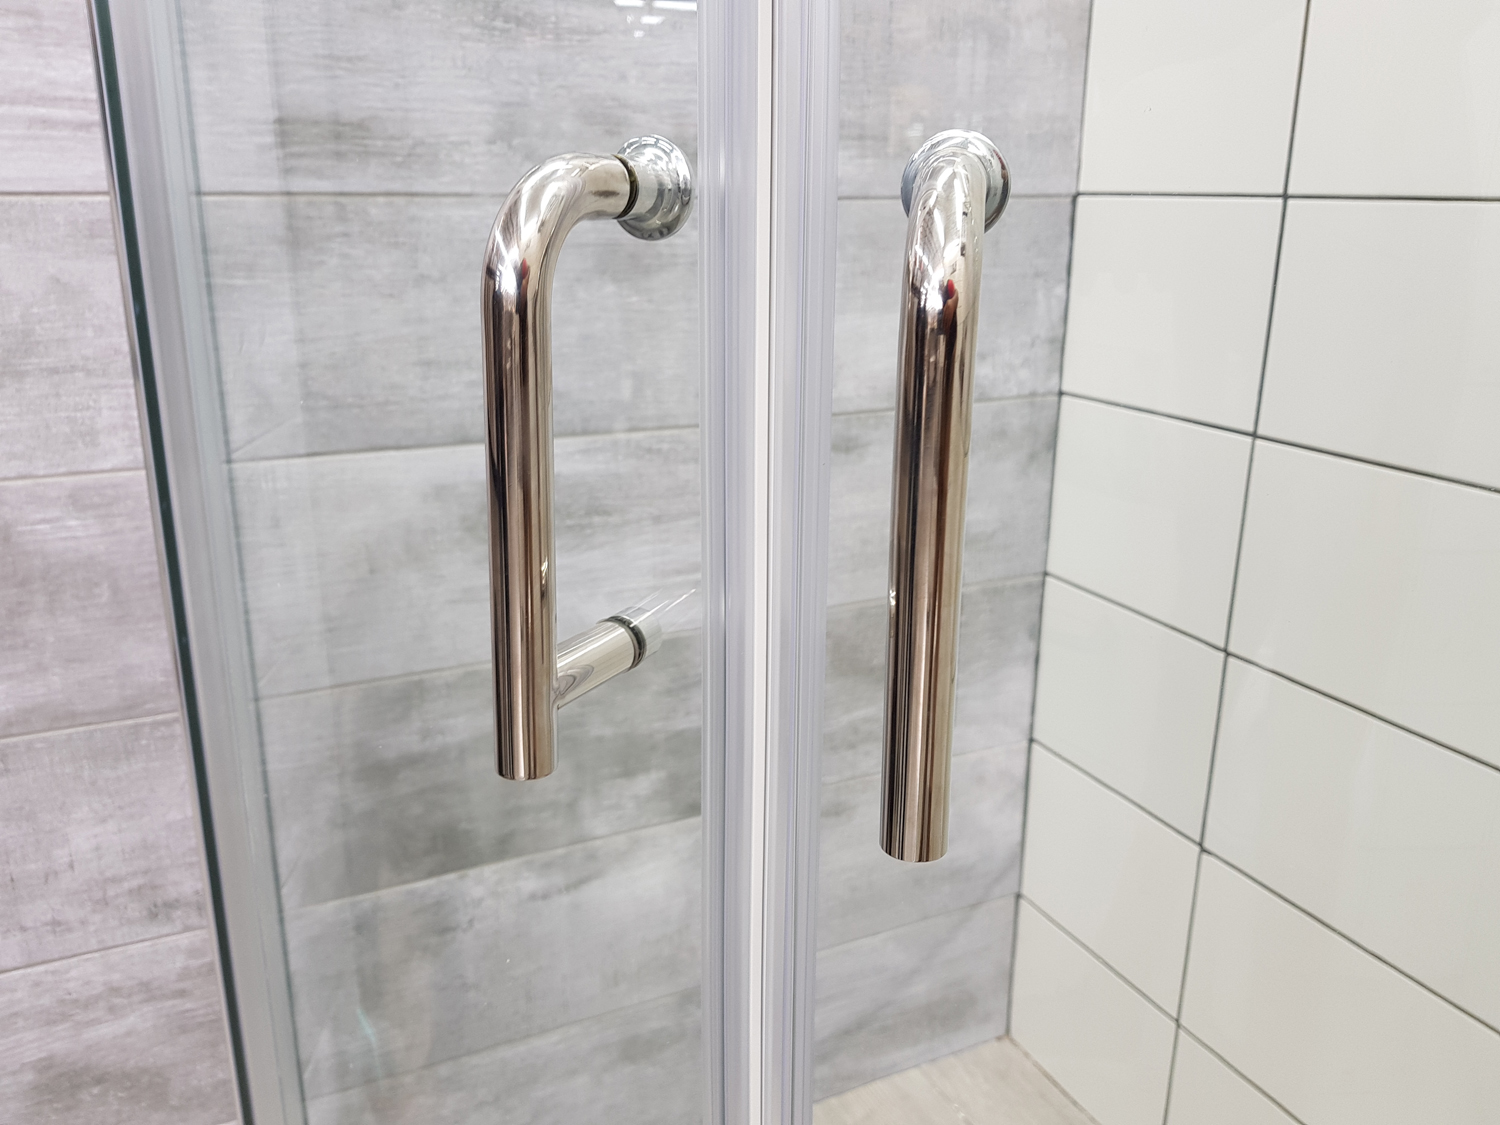 Quadrant Chrome Shower Enclosure With Sliding Door - 900 x 900 x 1850mm handles
